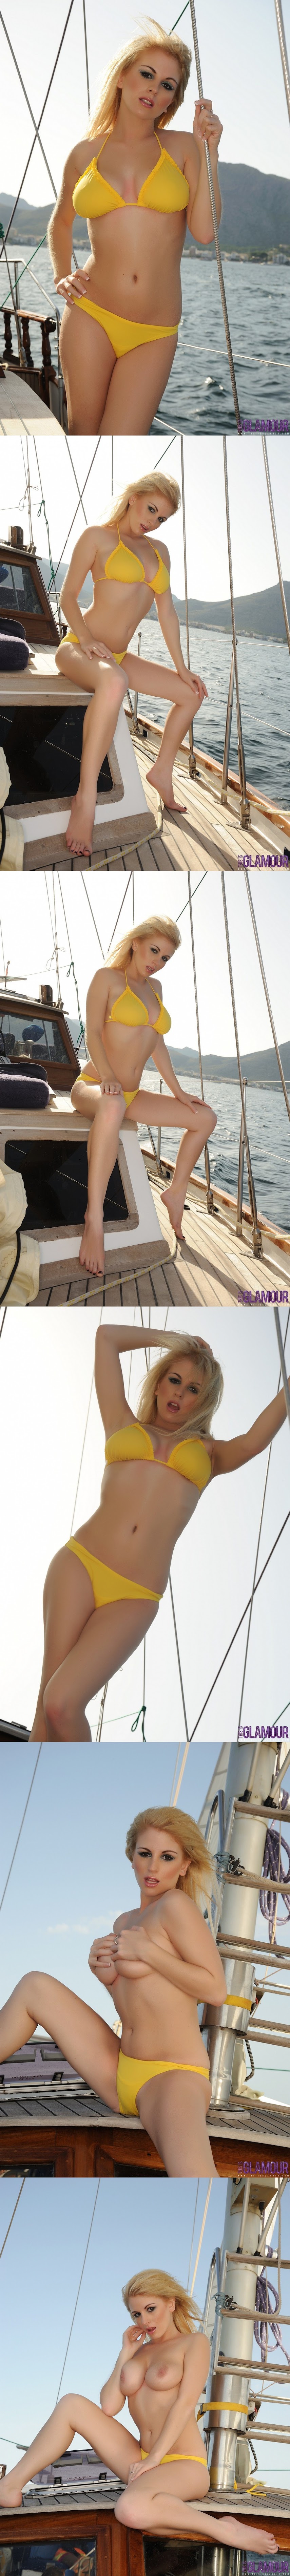 Zoe Stollery Sets Sail In A Canary Yellow Bikini - idols